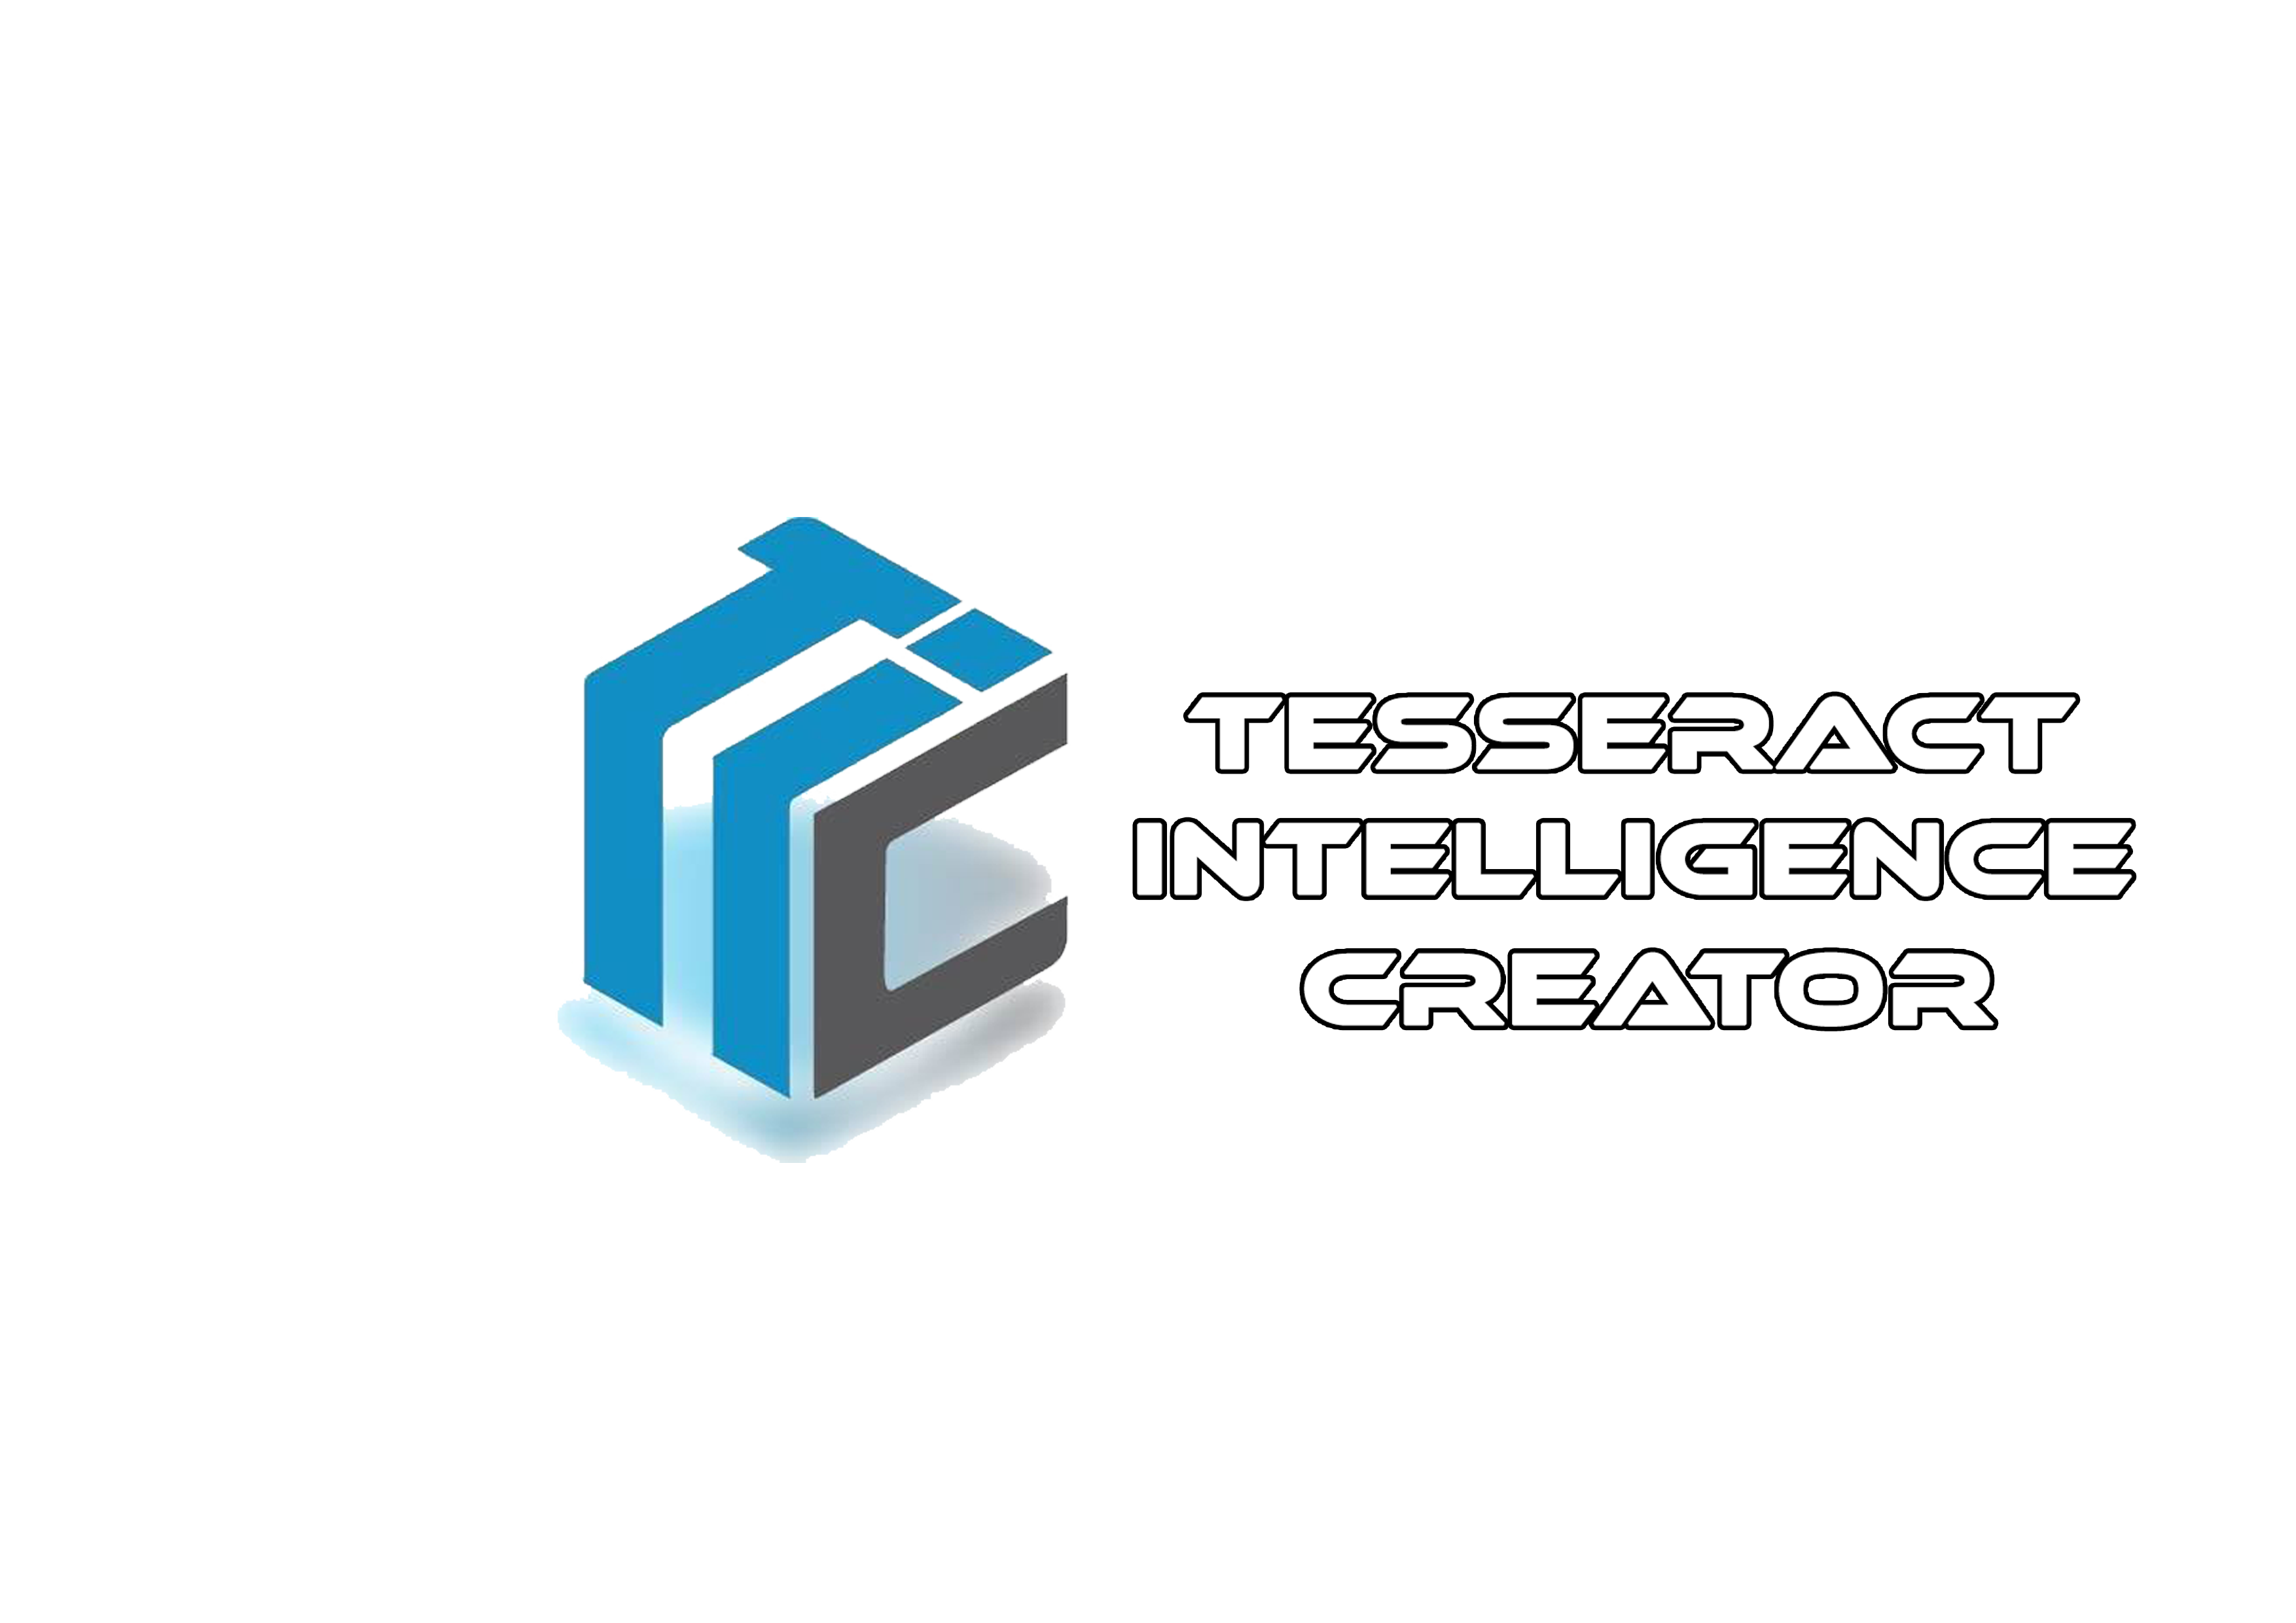 Tesseract Intelligence Creator